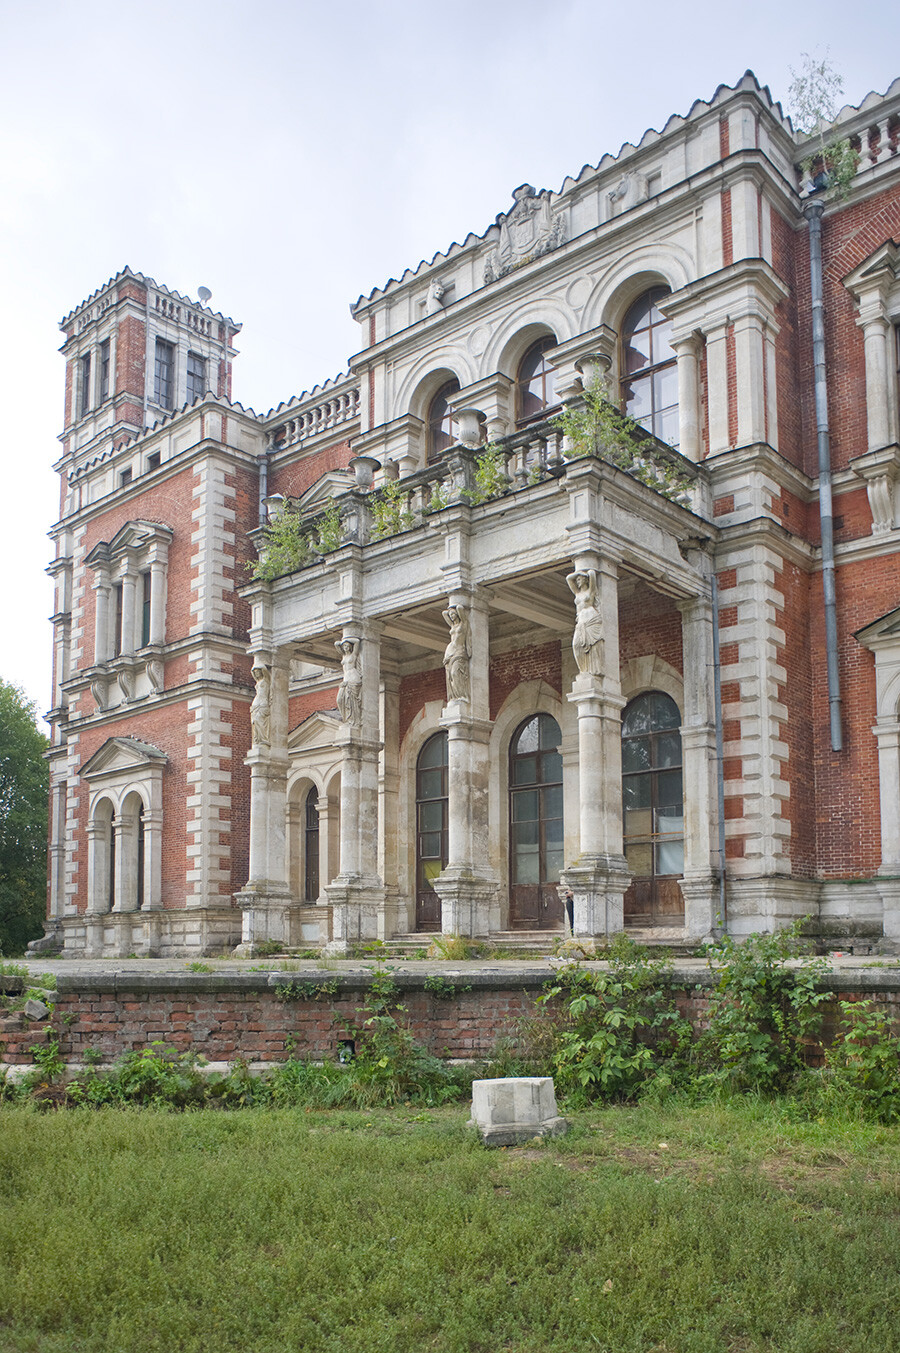 Vorontsov-Dashkov mansion. South facade with portico. August 30, 2014.